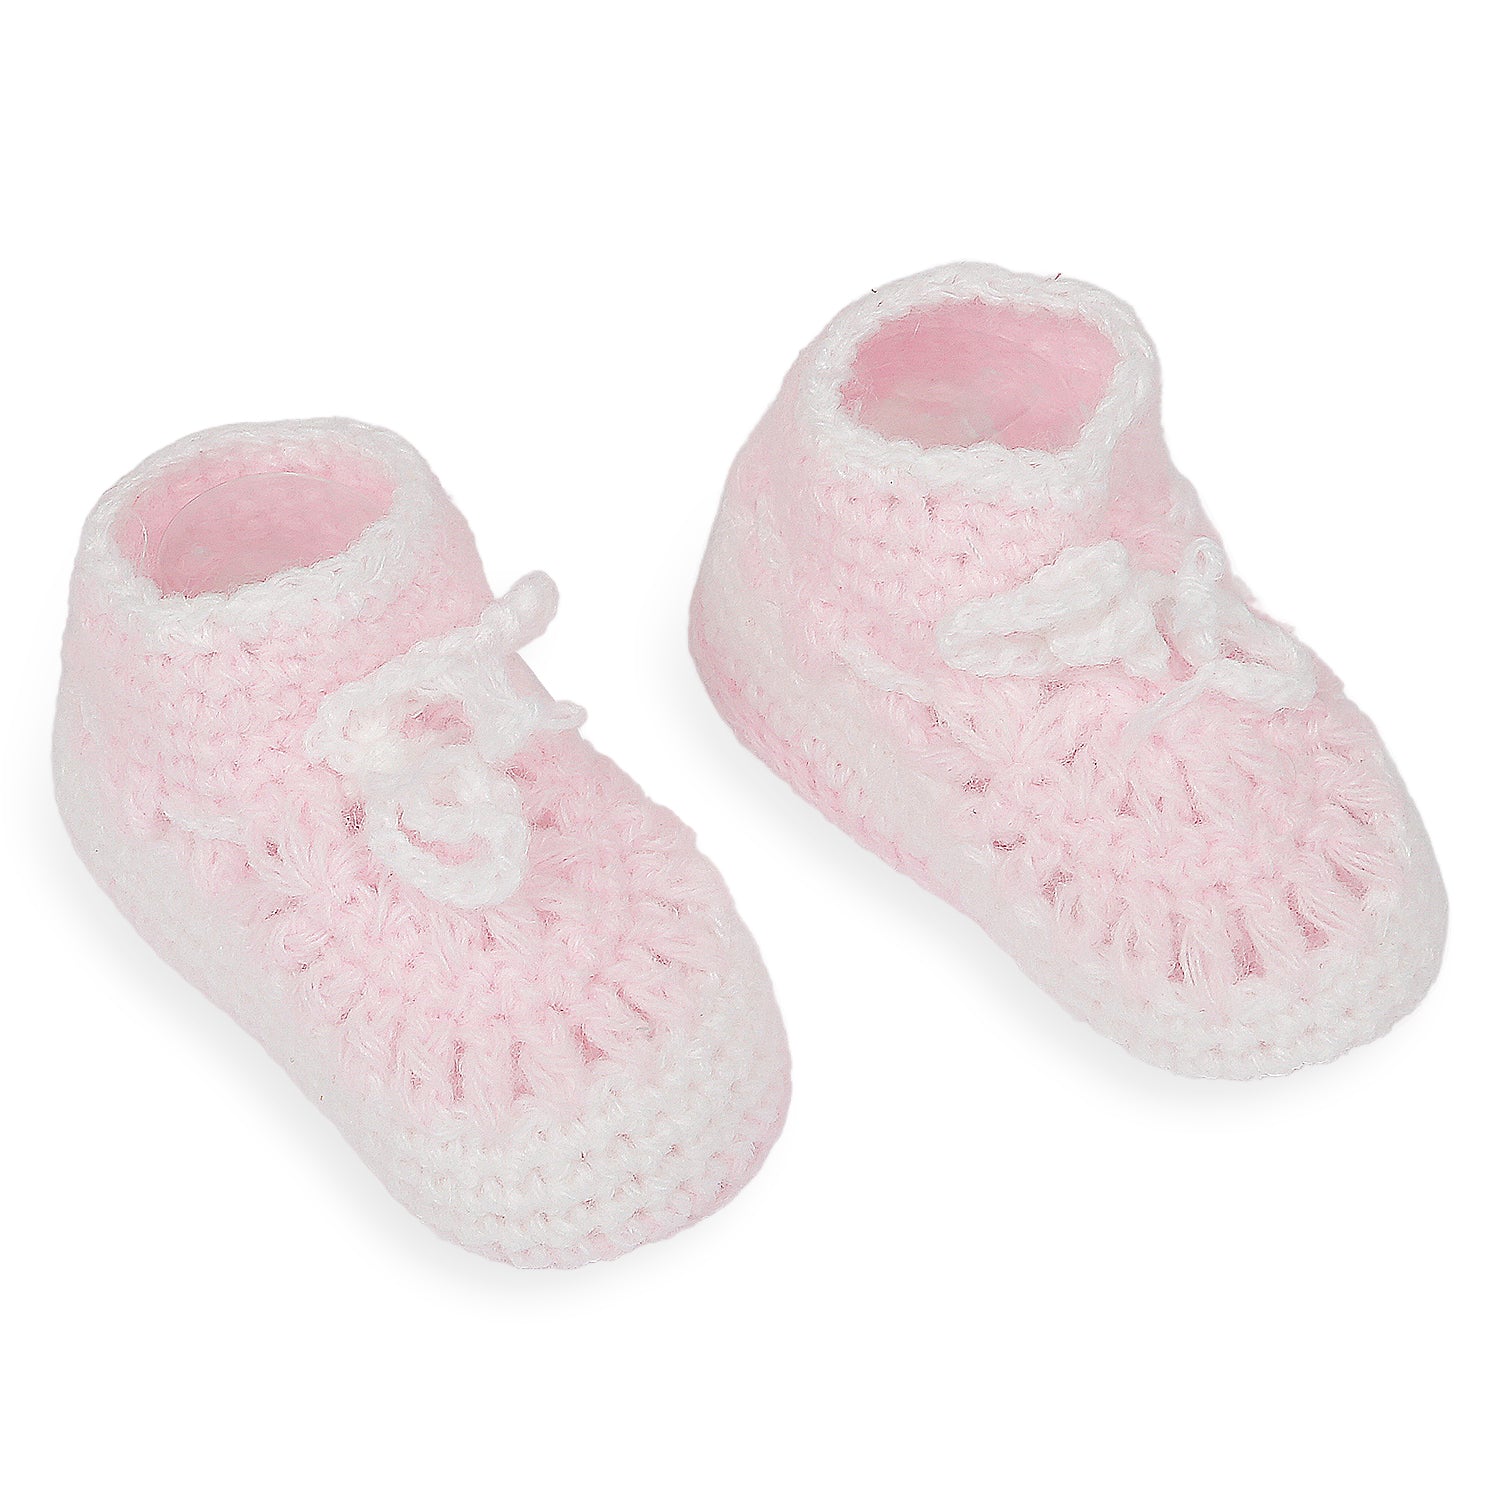 Knitted Newborn Crochet Socks Booties - Pink